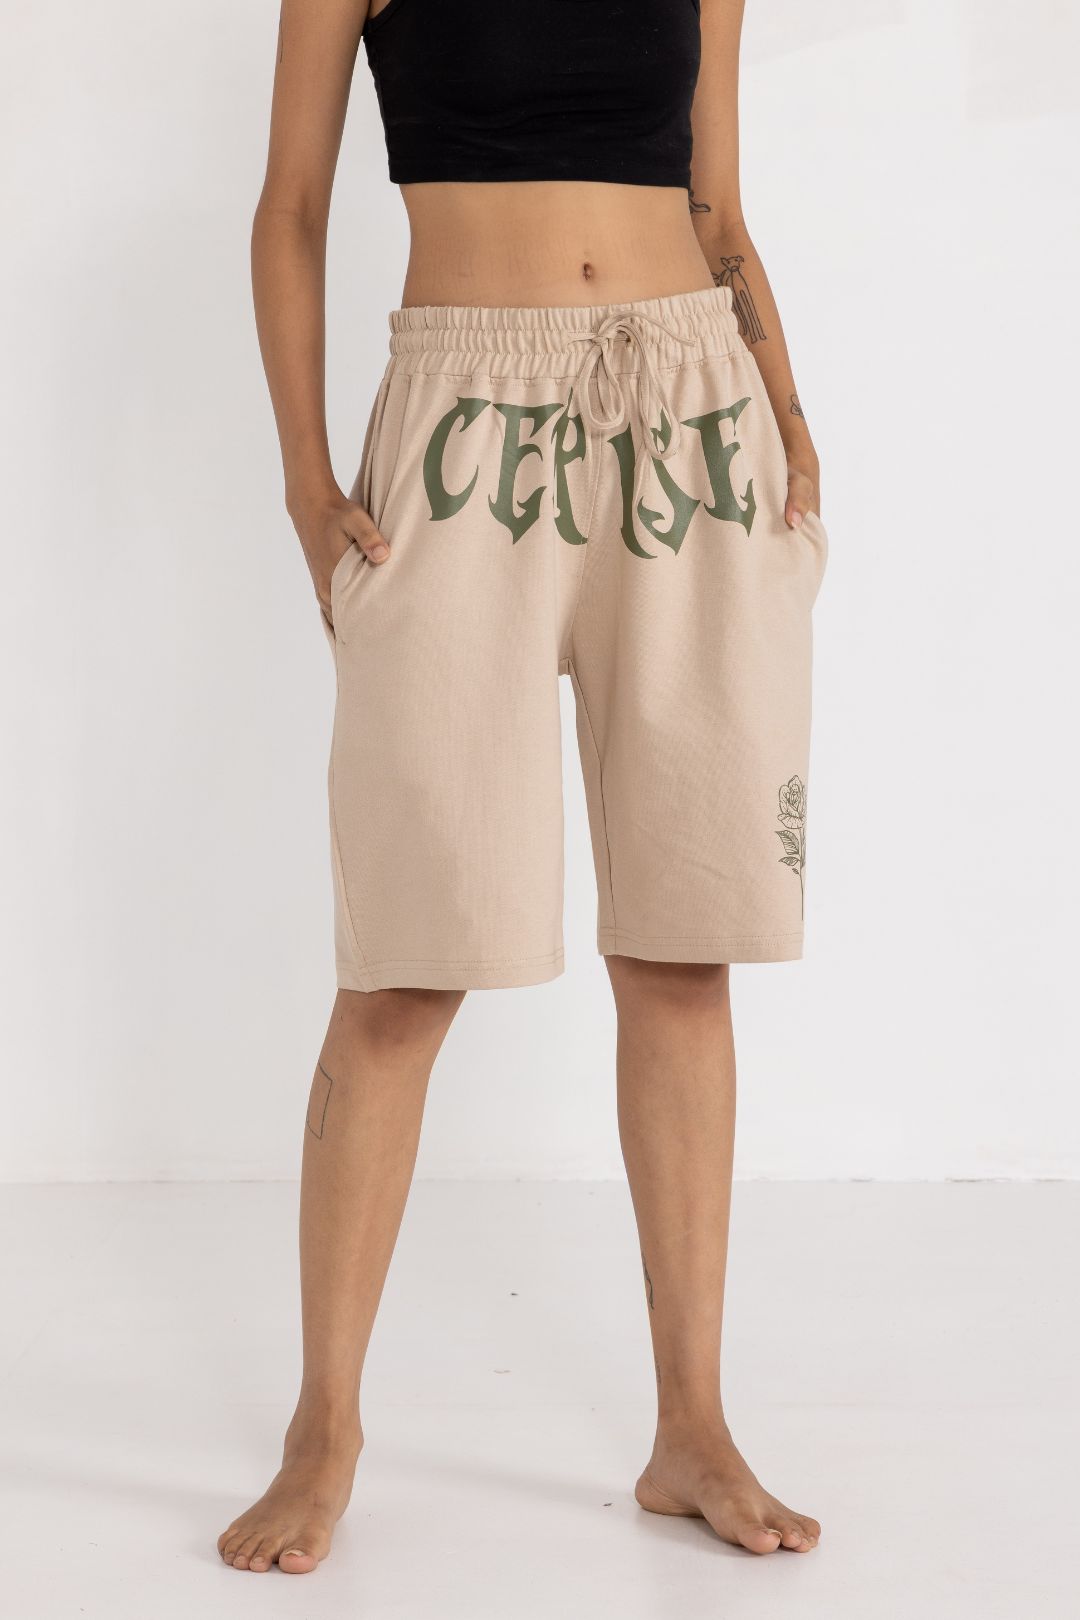 Cerise Serenity Sands Shorts